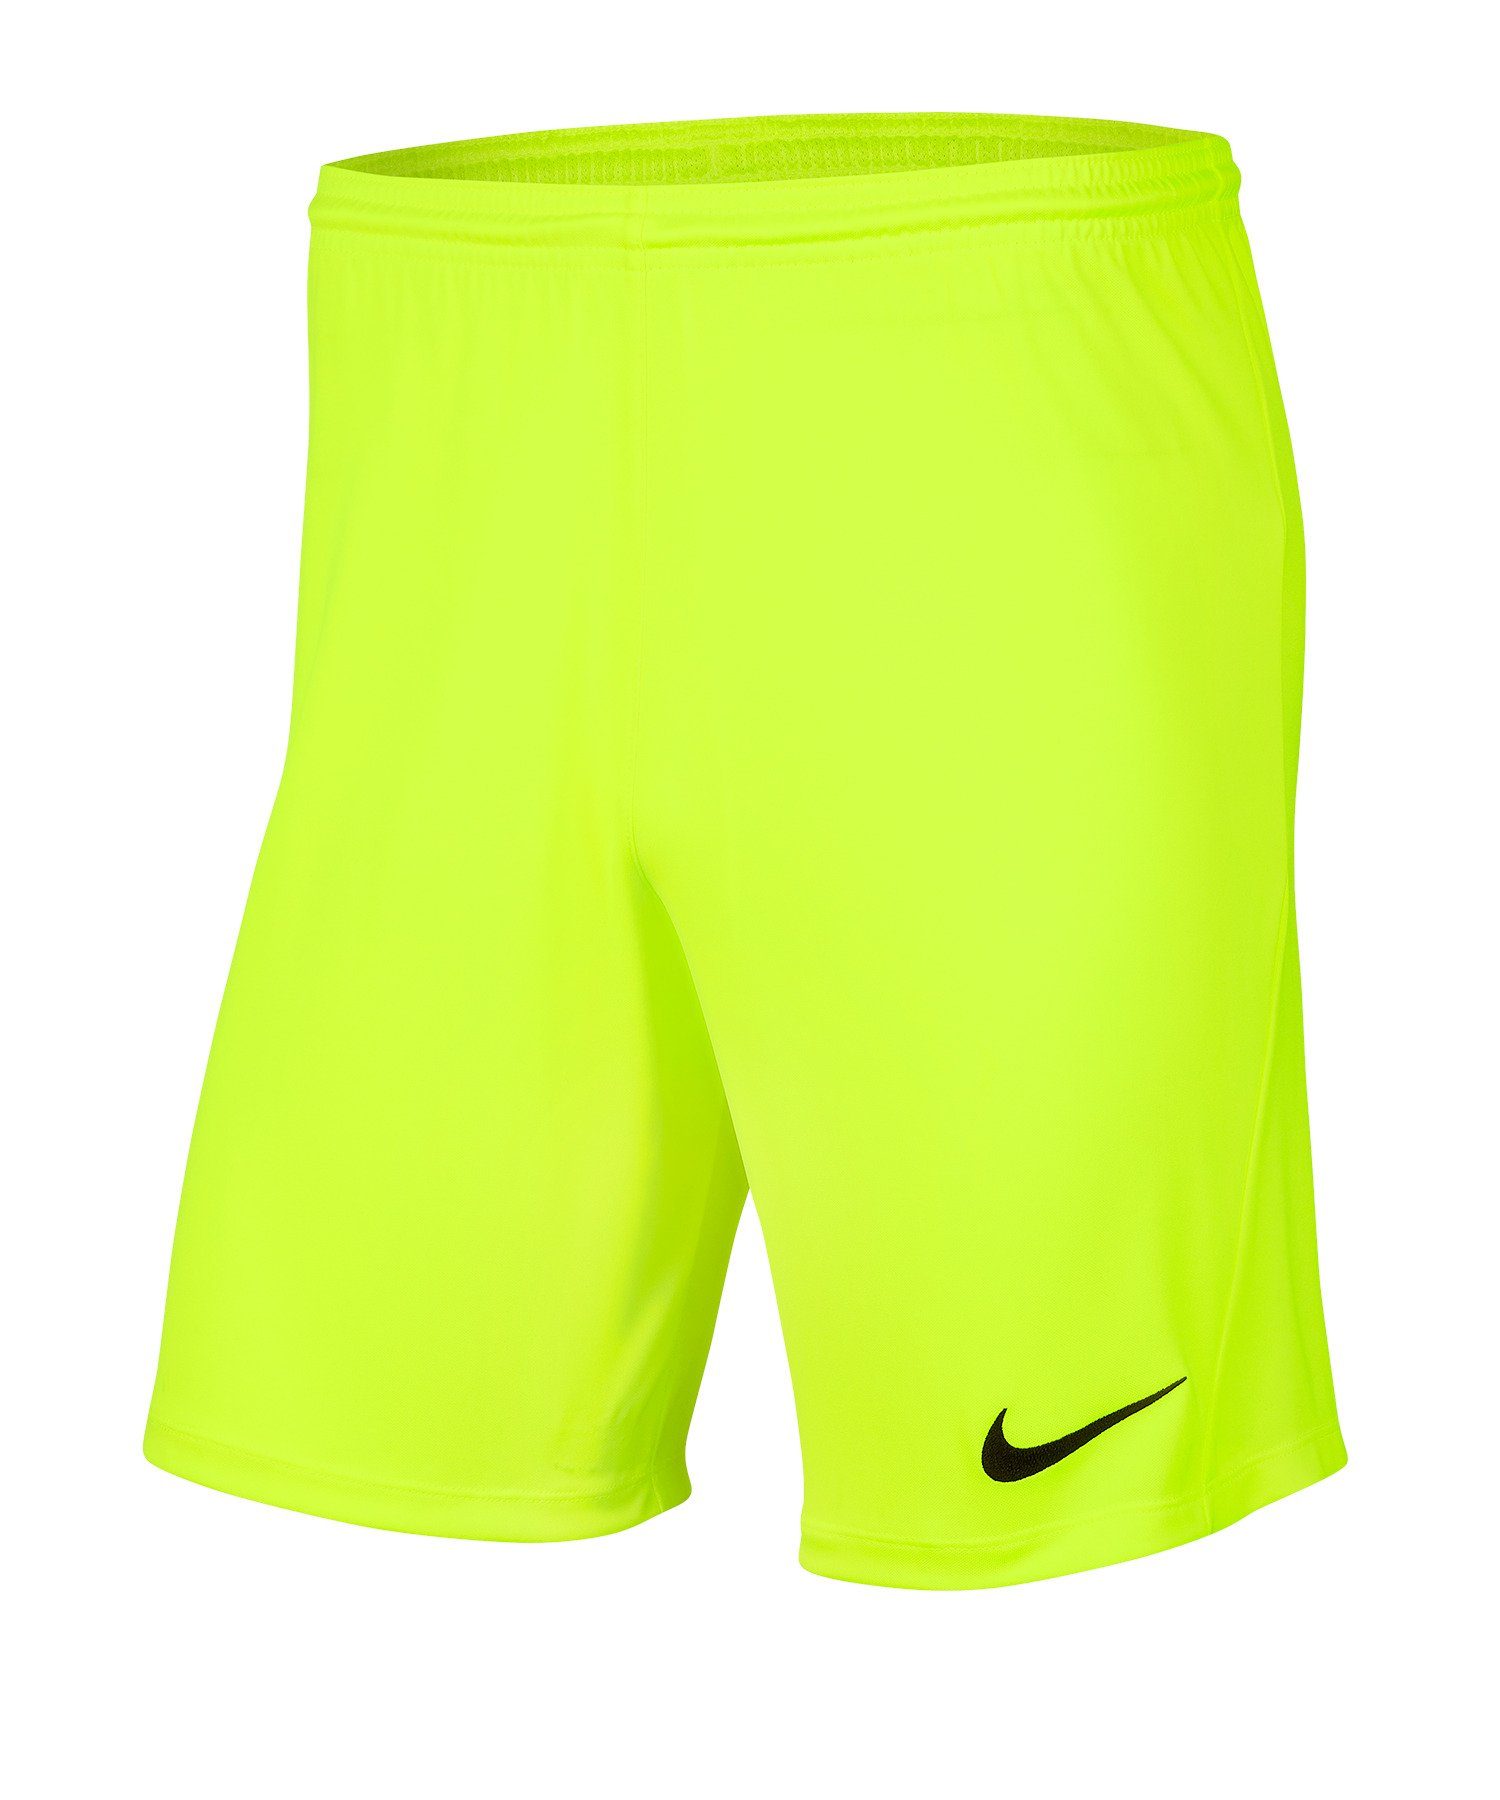 Nike Sporthose Park III Short gelb